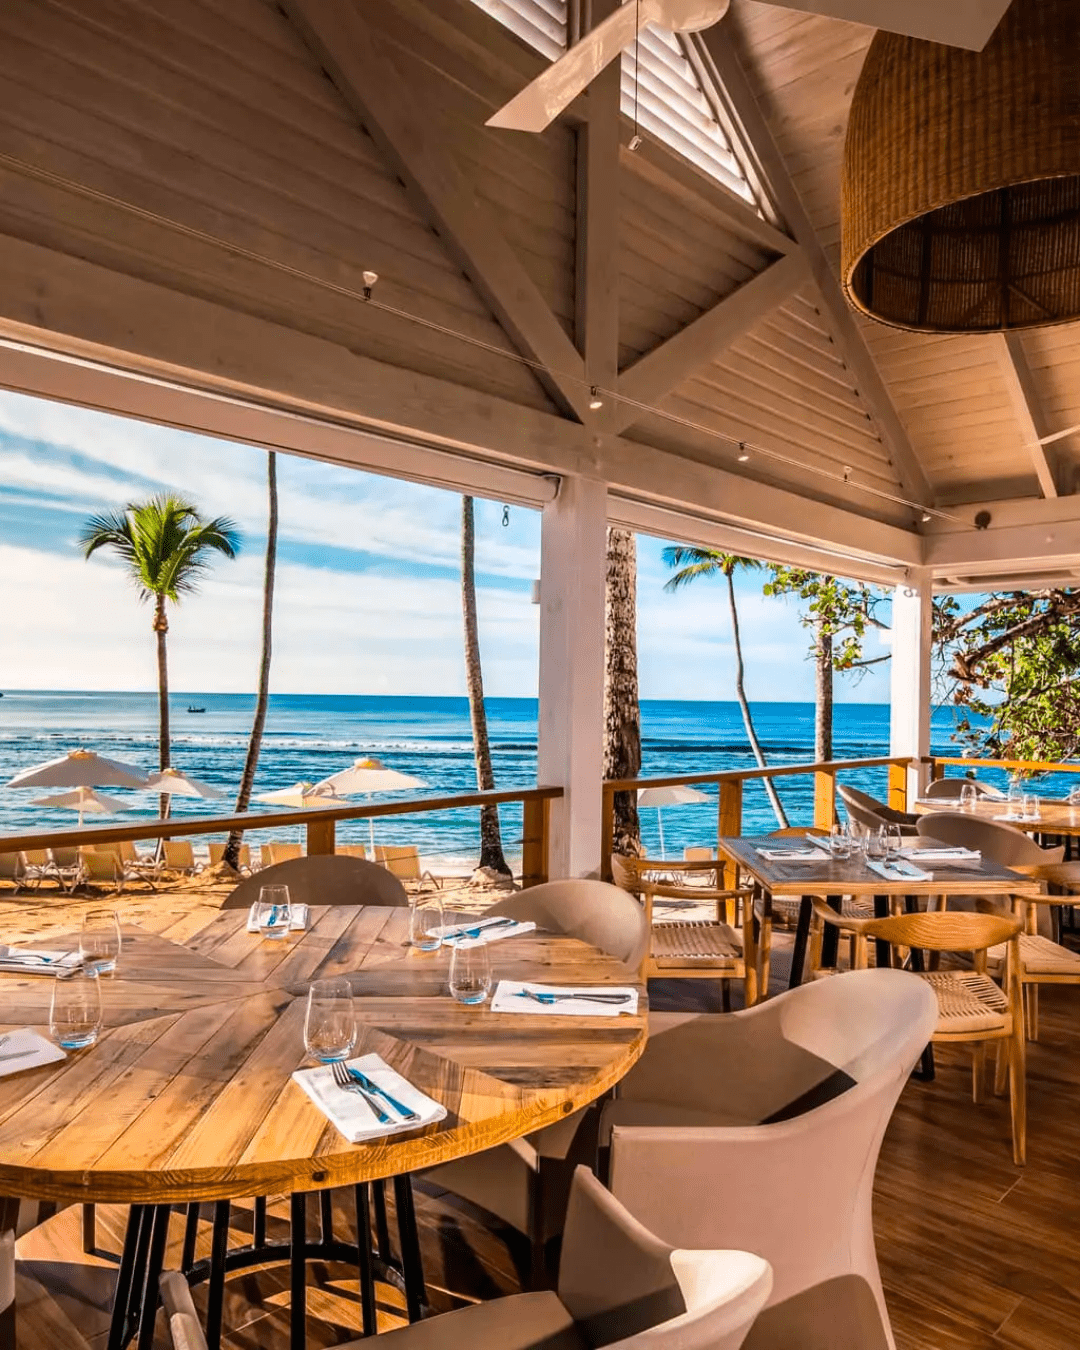 Minitas Beach Club & Restaurant - casa de campo MINITAS BEACH - la romana - Dominican Republic